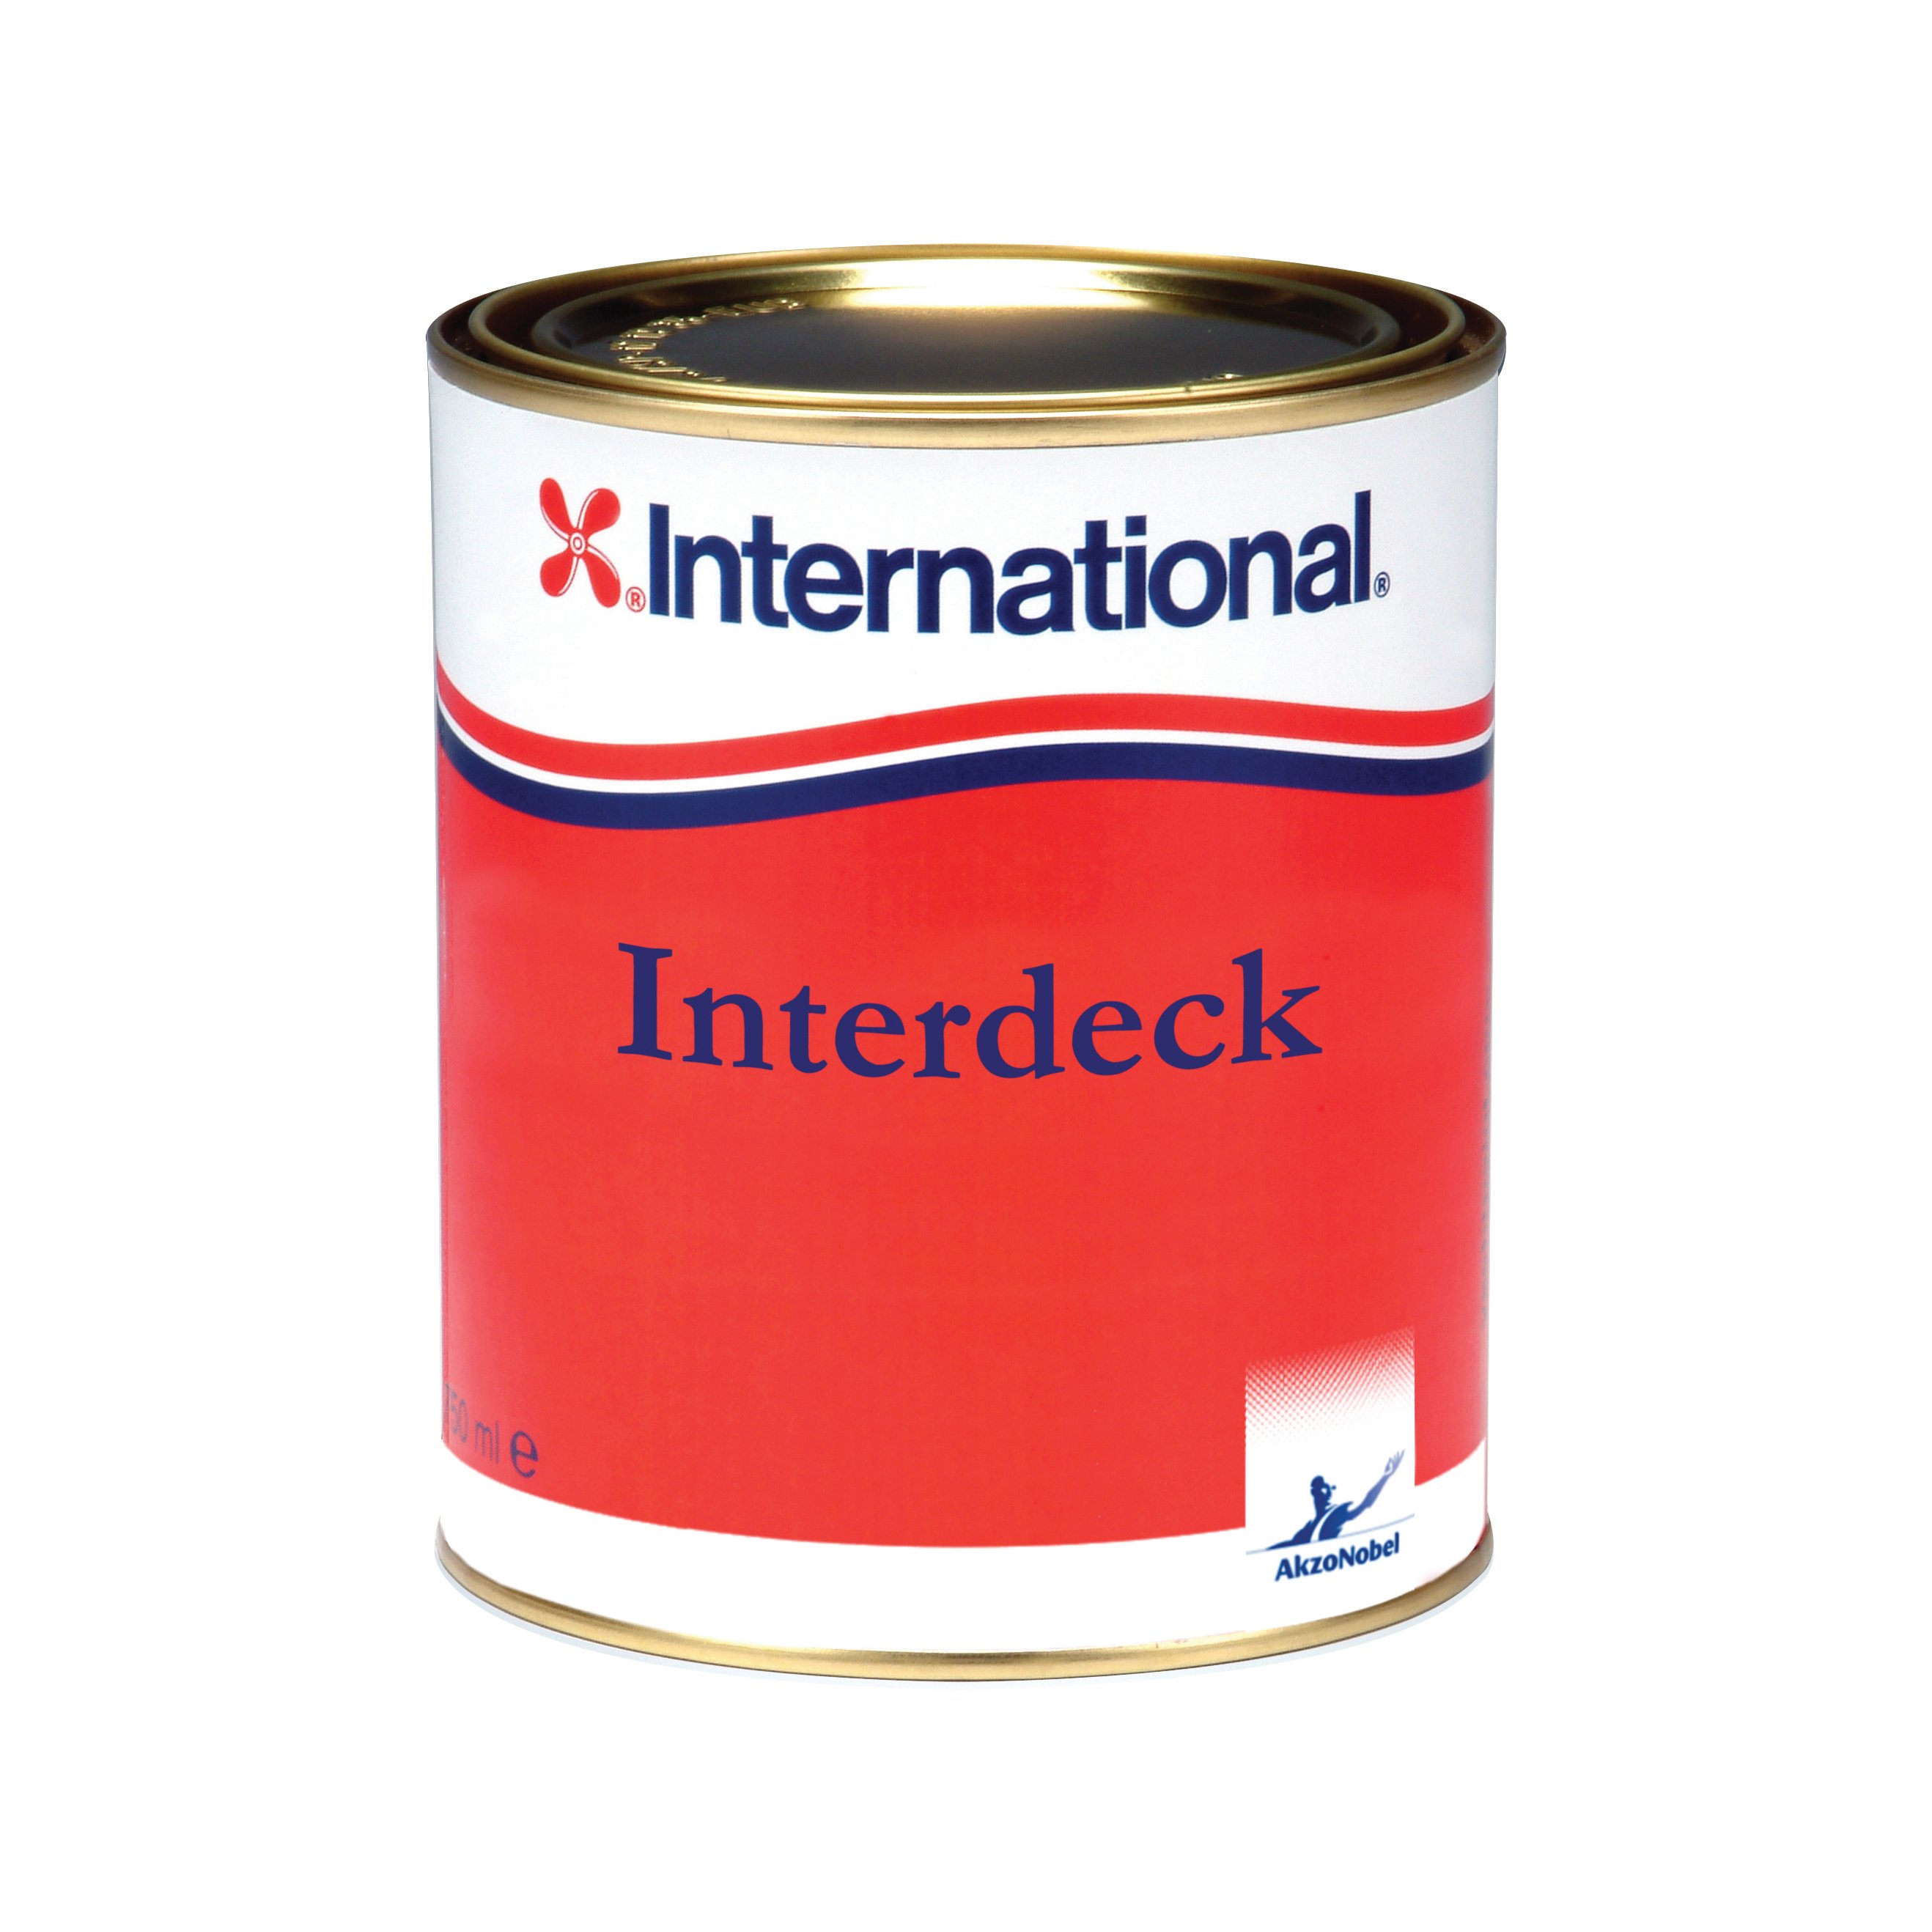 International Interdeck aflak - zandbeige 009, 750ml